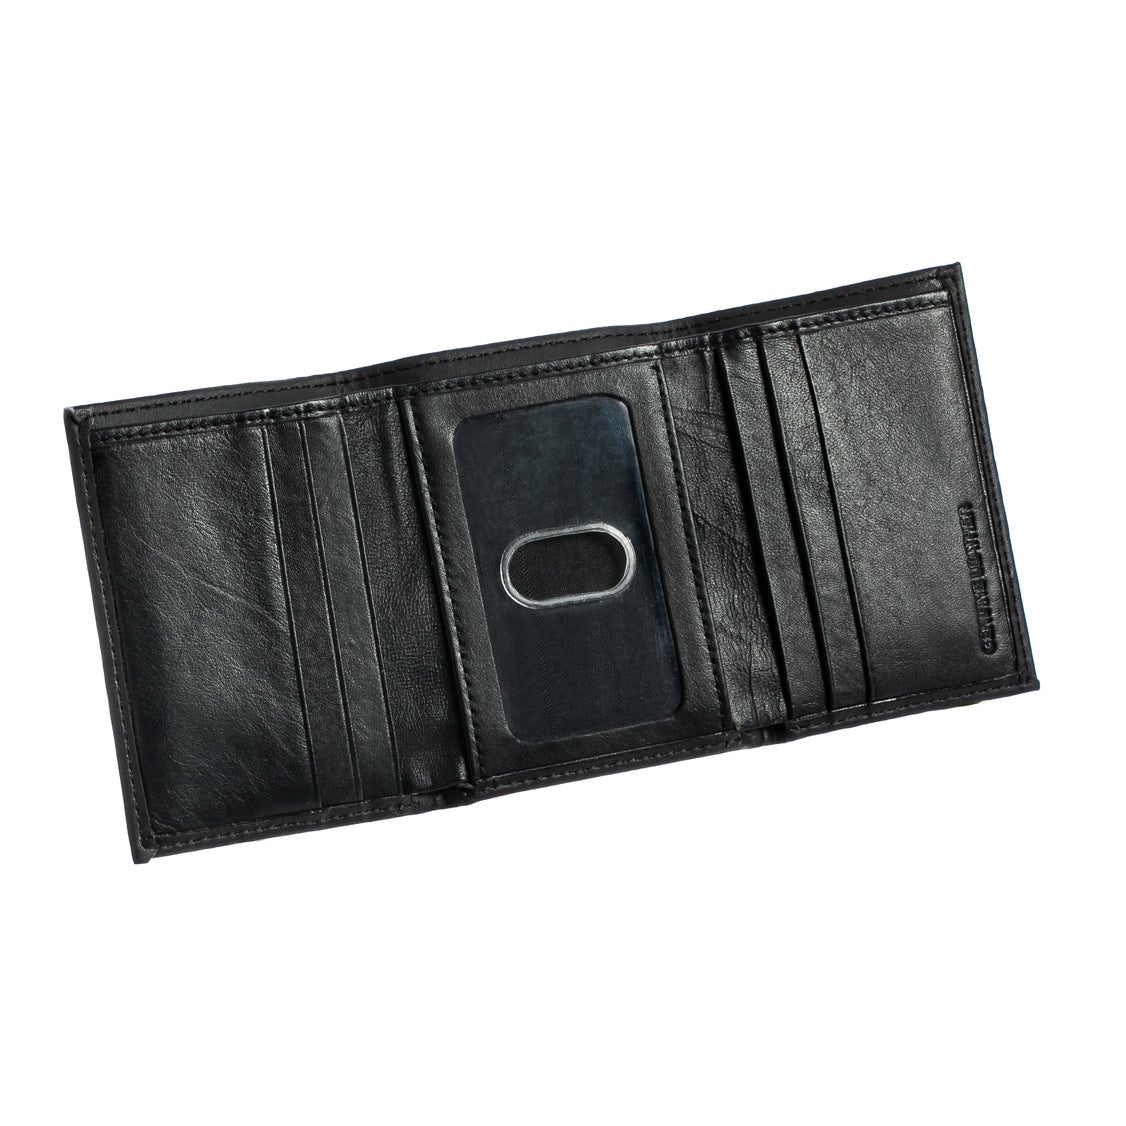 University of Iowa Tri-Fold Leather Wallet